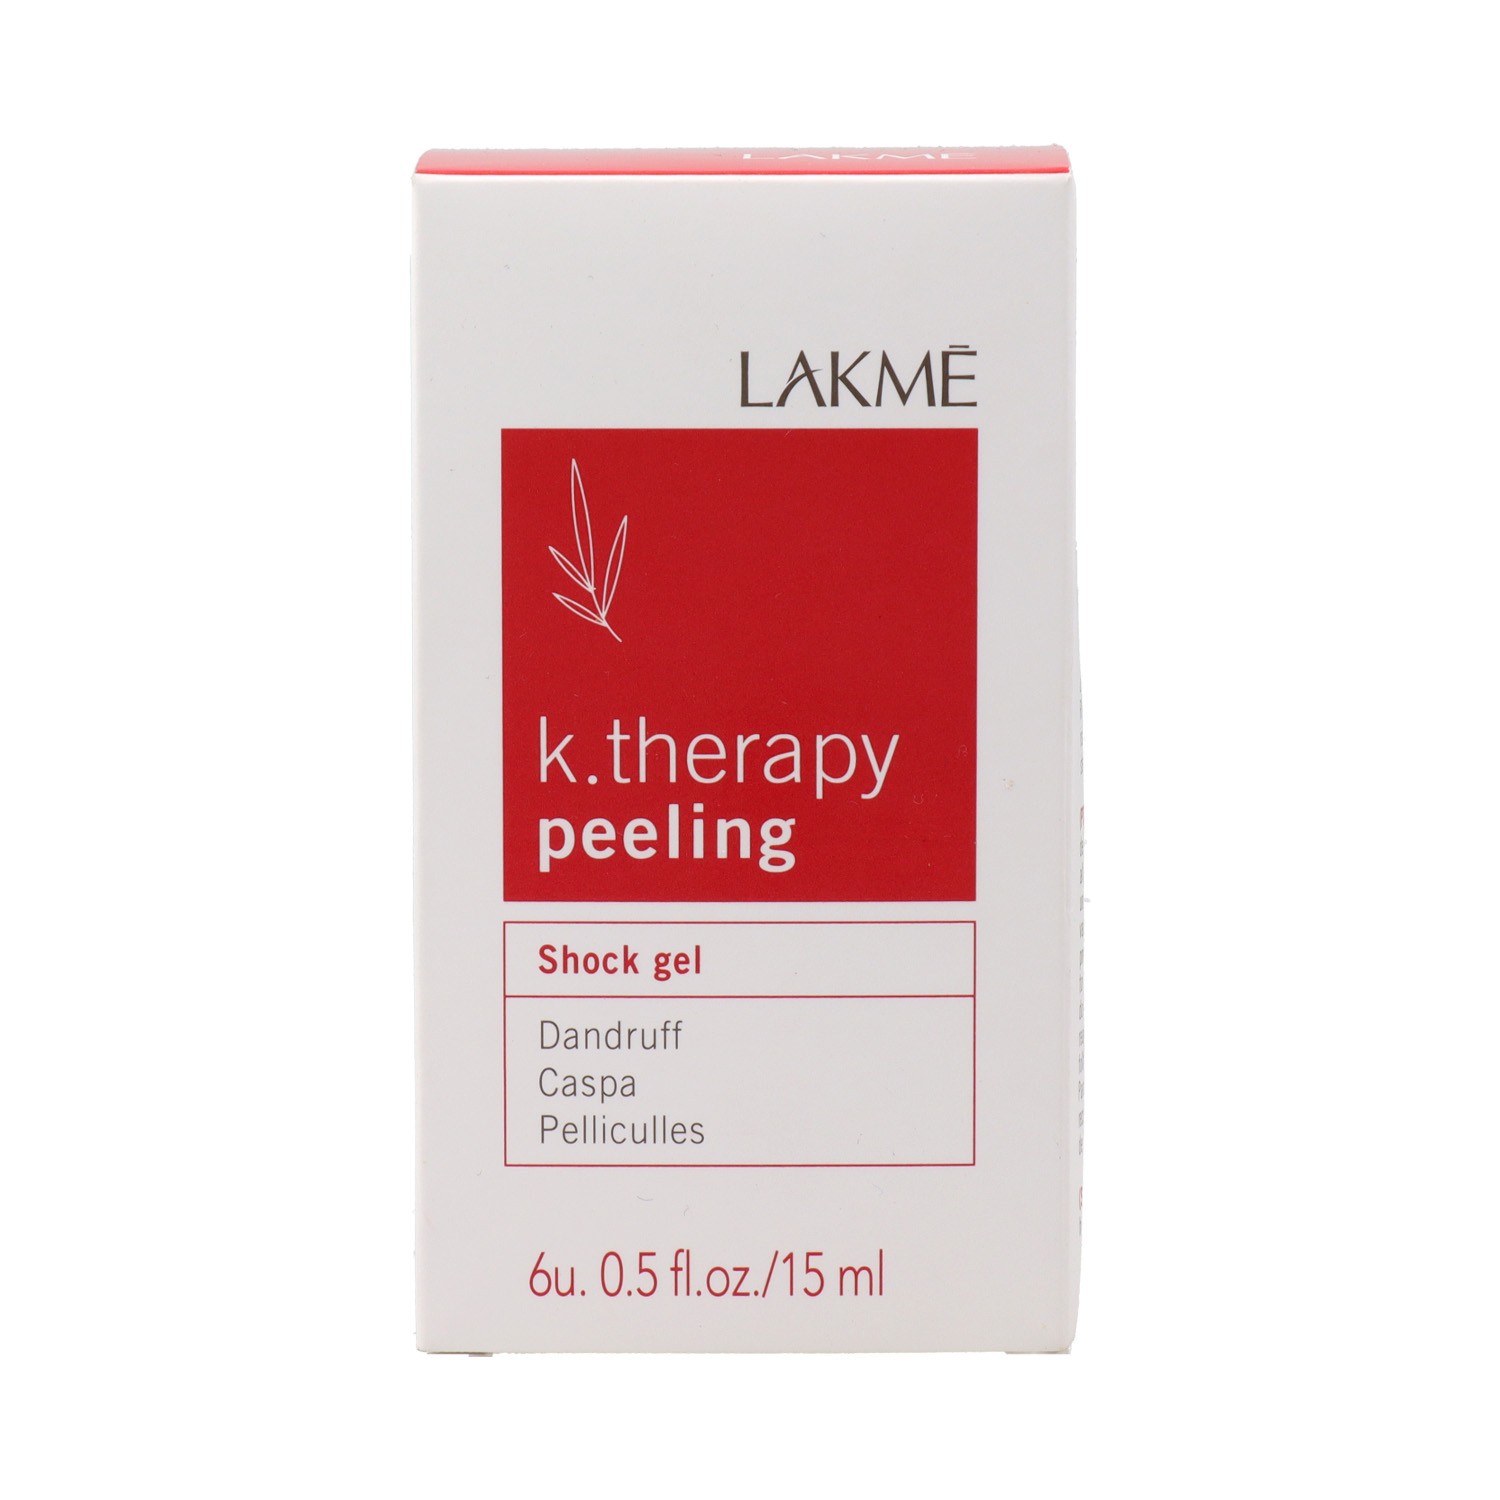 Lakme K.therapy Peeling Choc Gel 6u x 15ml